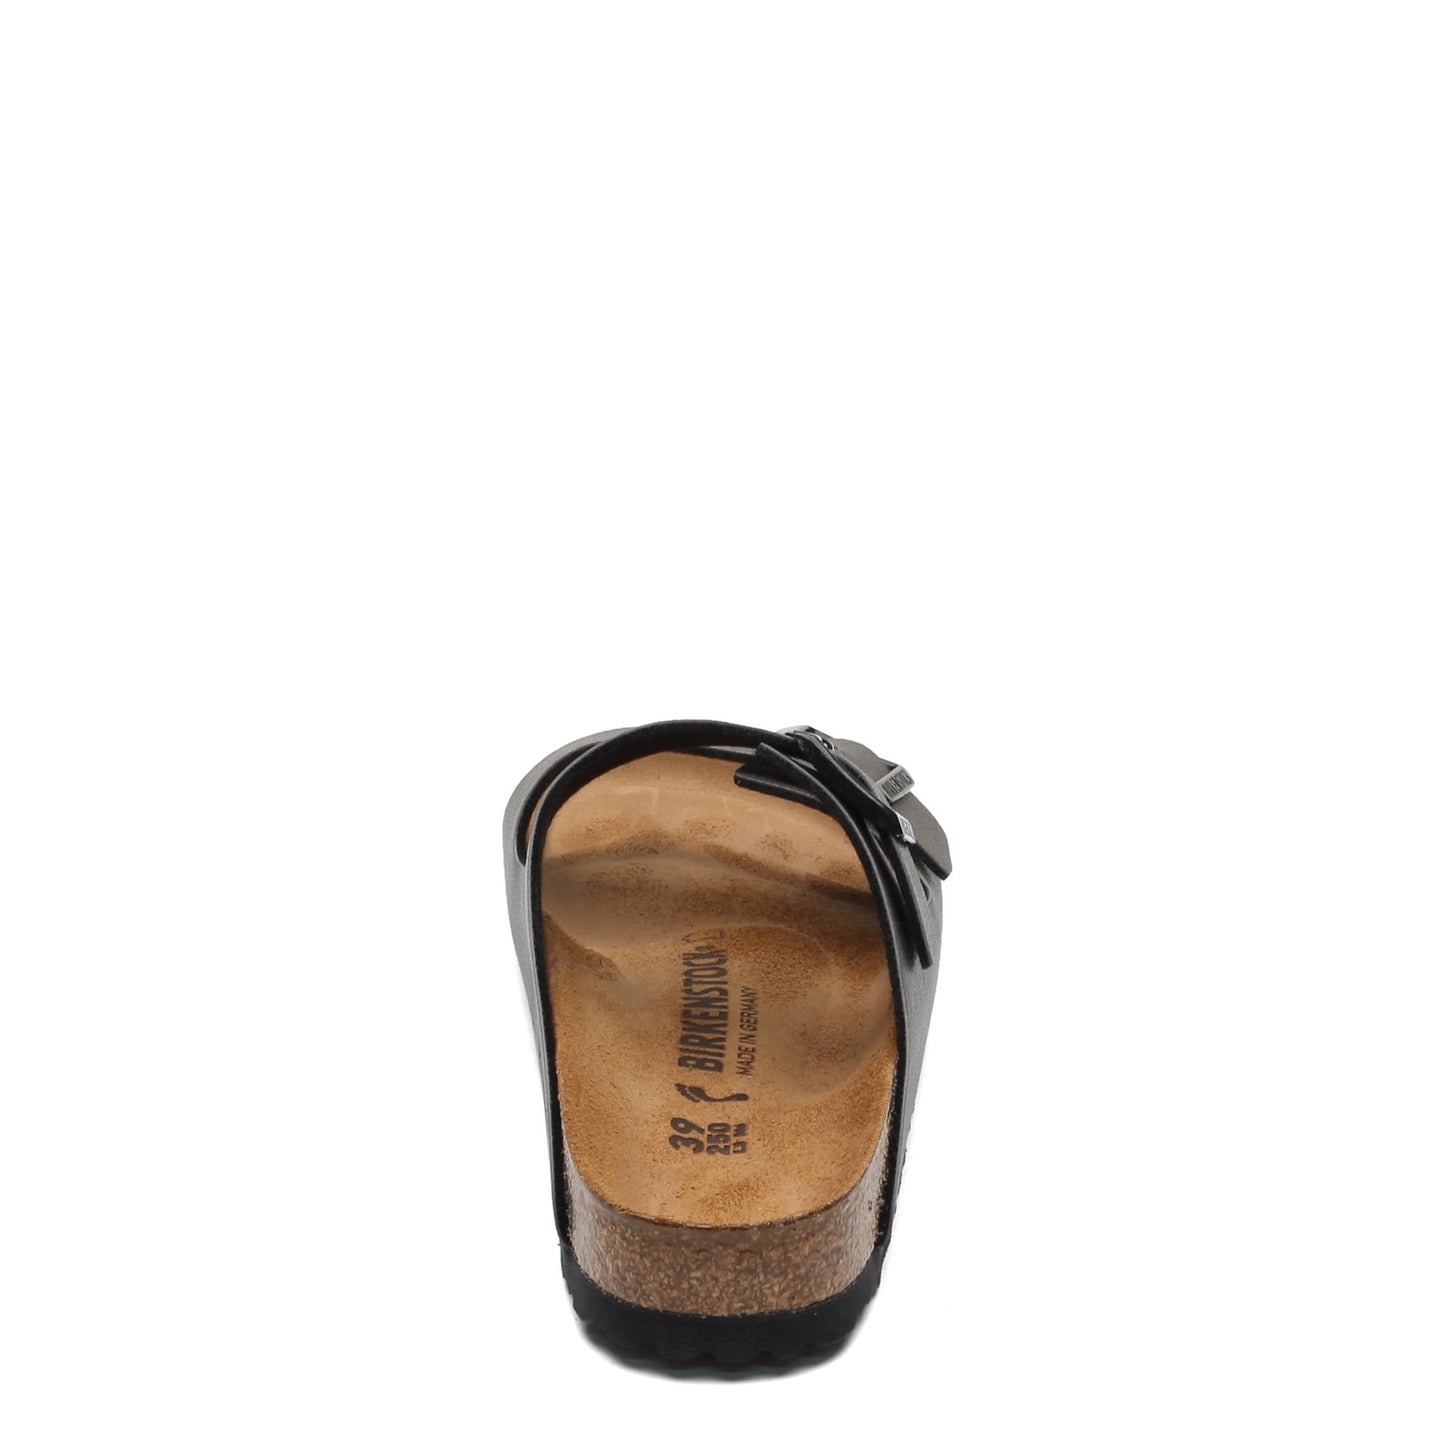 Peltz Shoes  Women's Birkenstock Arizona Birkoflor Slide Sandal - Narrow Width ANTHRACITE 1000 127 N